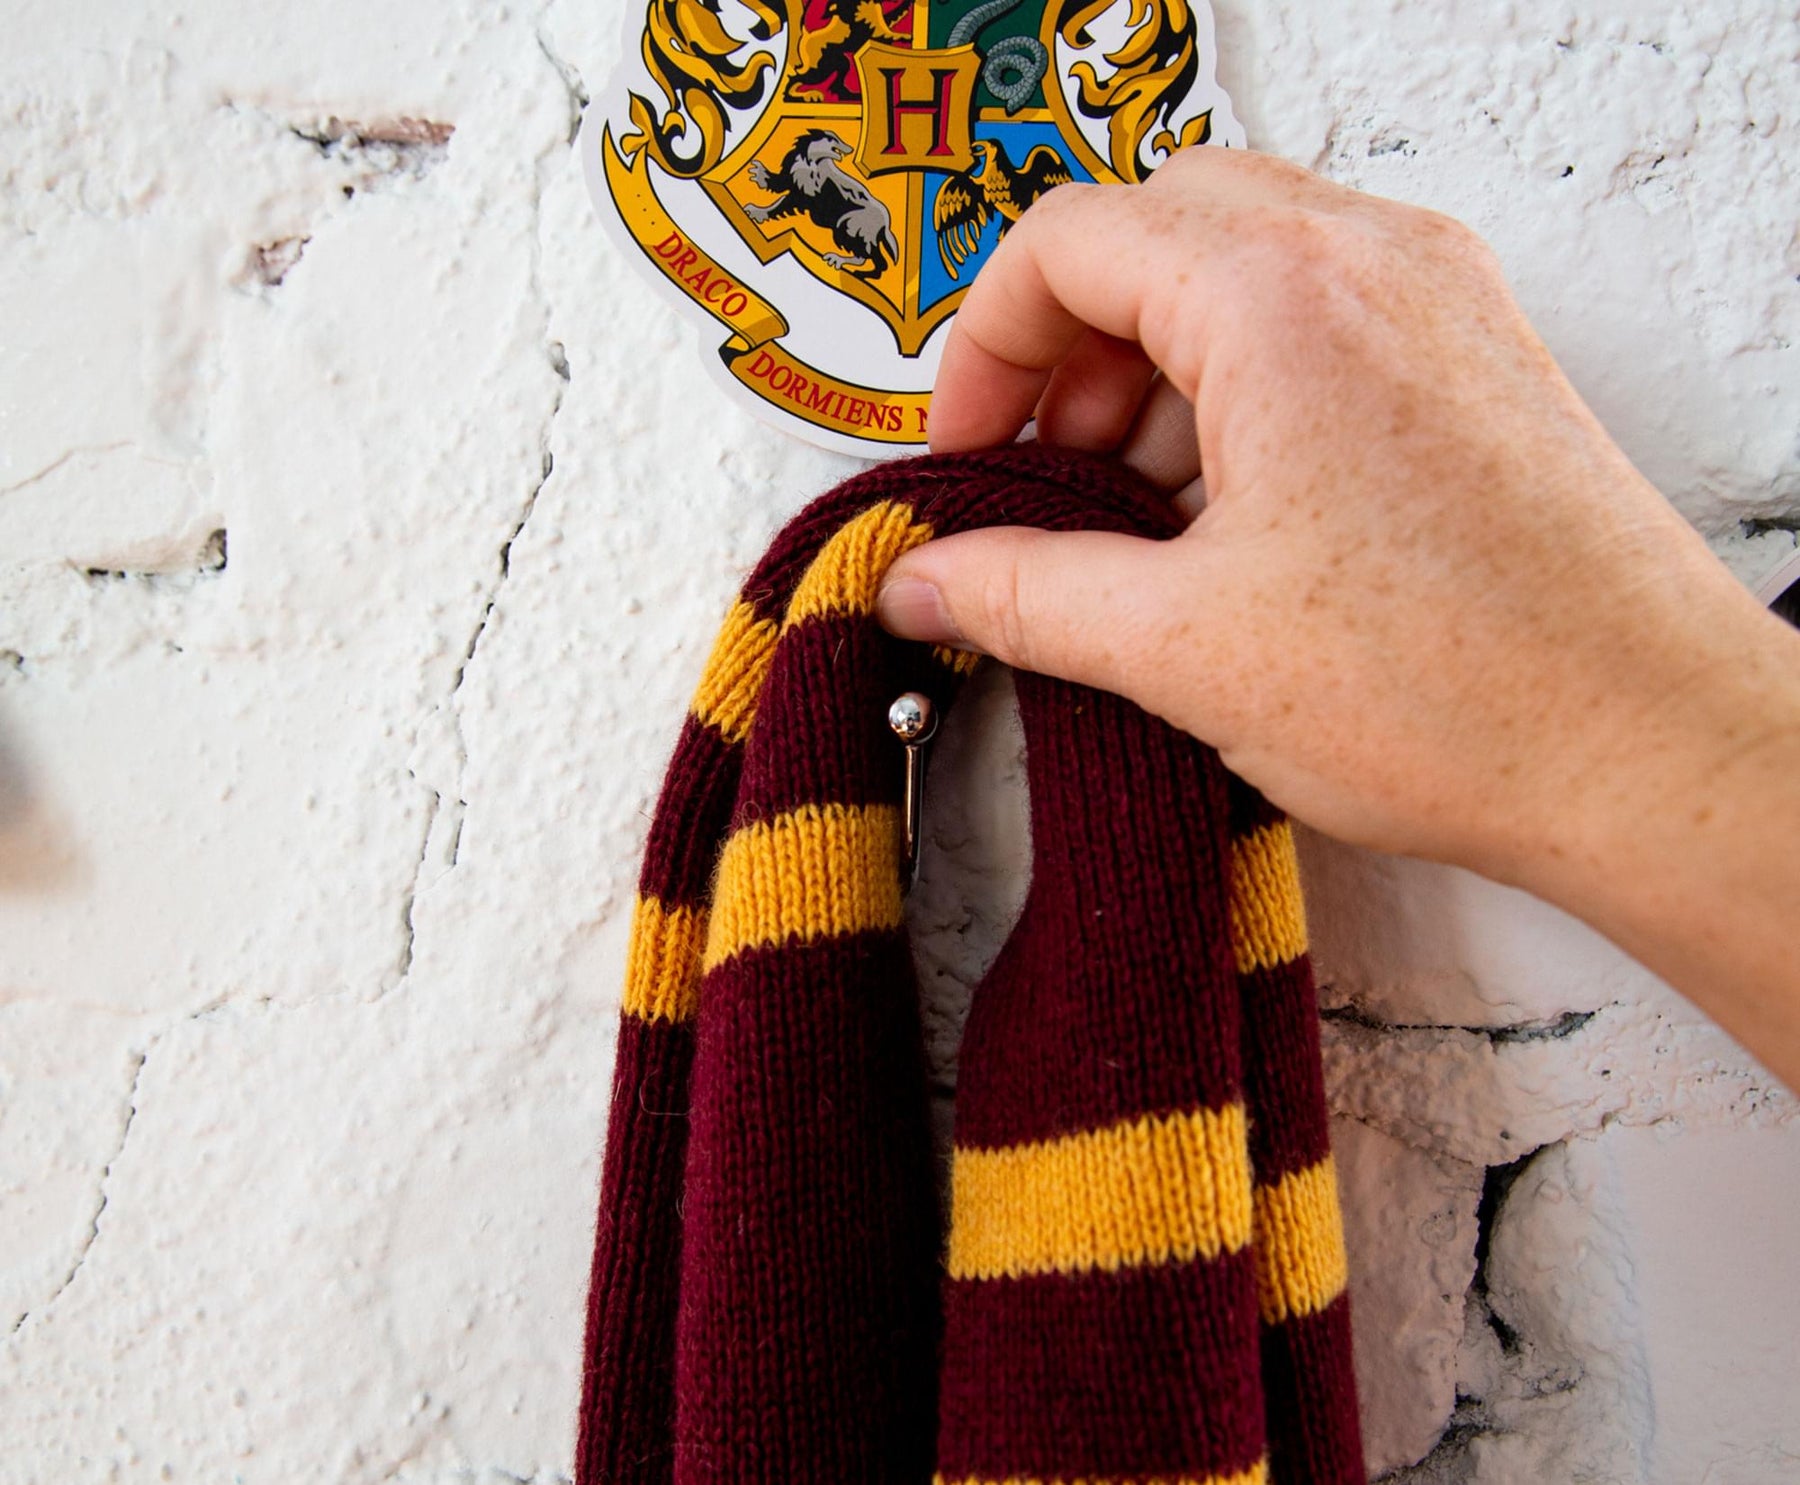 Harry Potter Icons Die-Cut Coat Hanger Wall Hooks | Set of 3